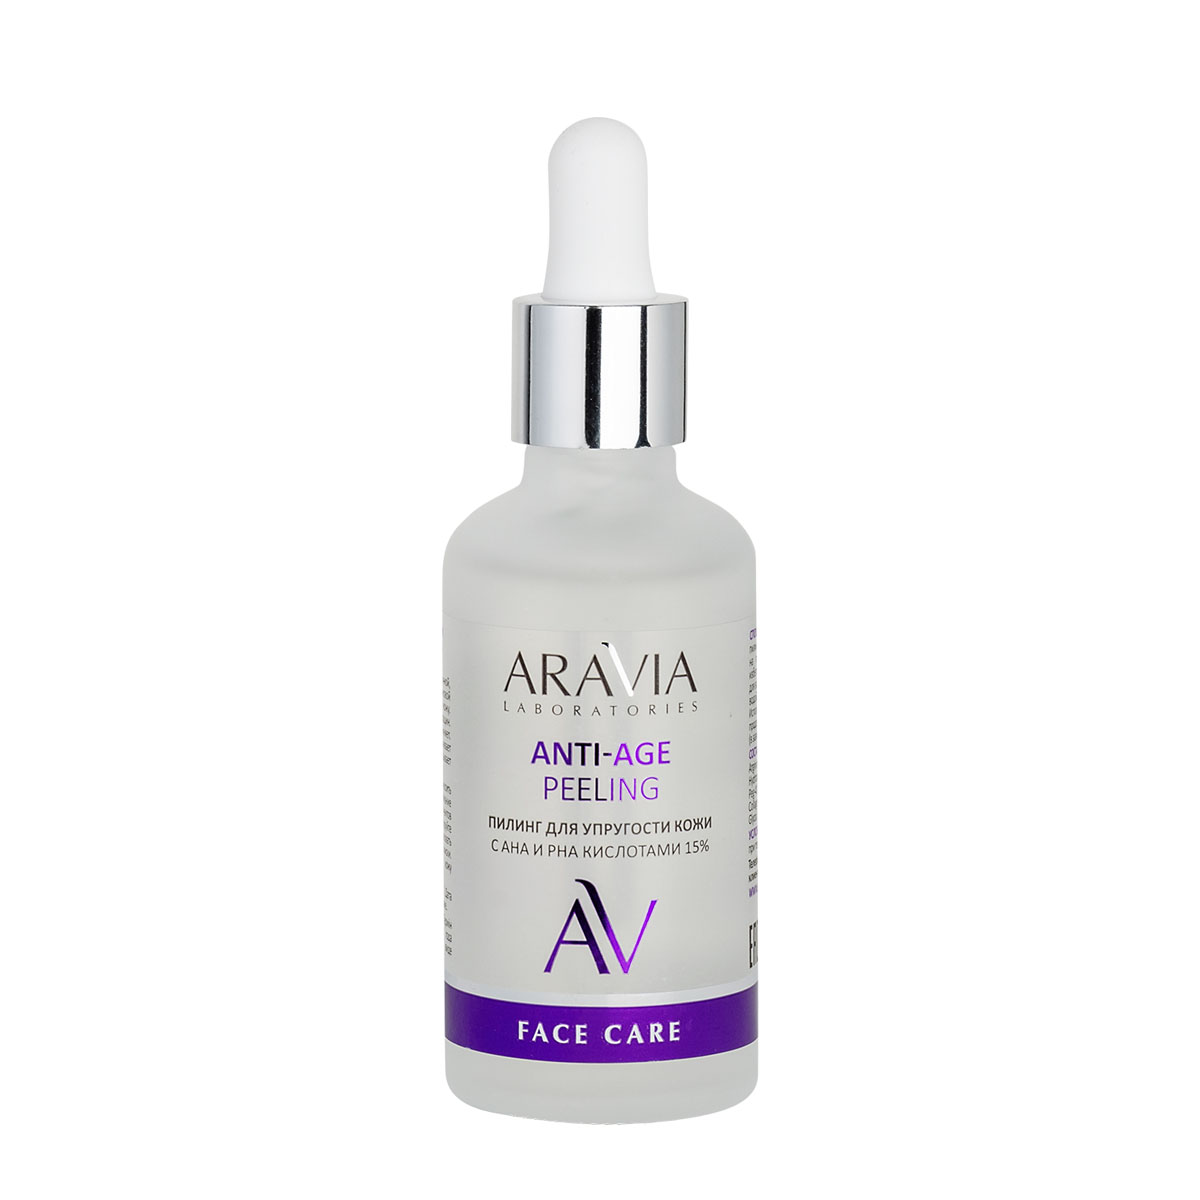 Aravia Laboratories Пилинг для упругости кожи с AHA и PHA кислотами 15% Anti-Age Peeling, 50 мл (Aravia Laboratories, Уход за лицом)